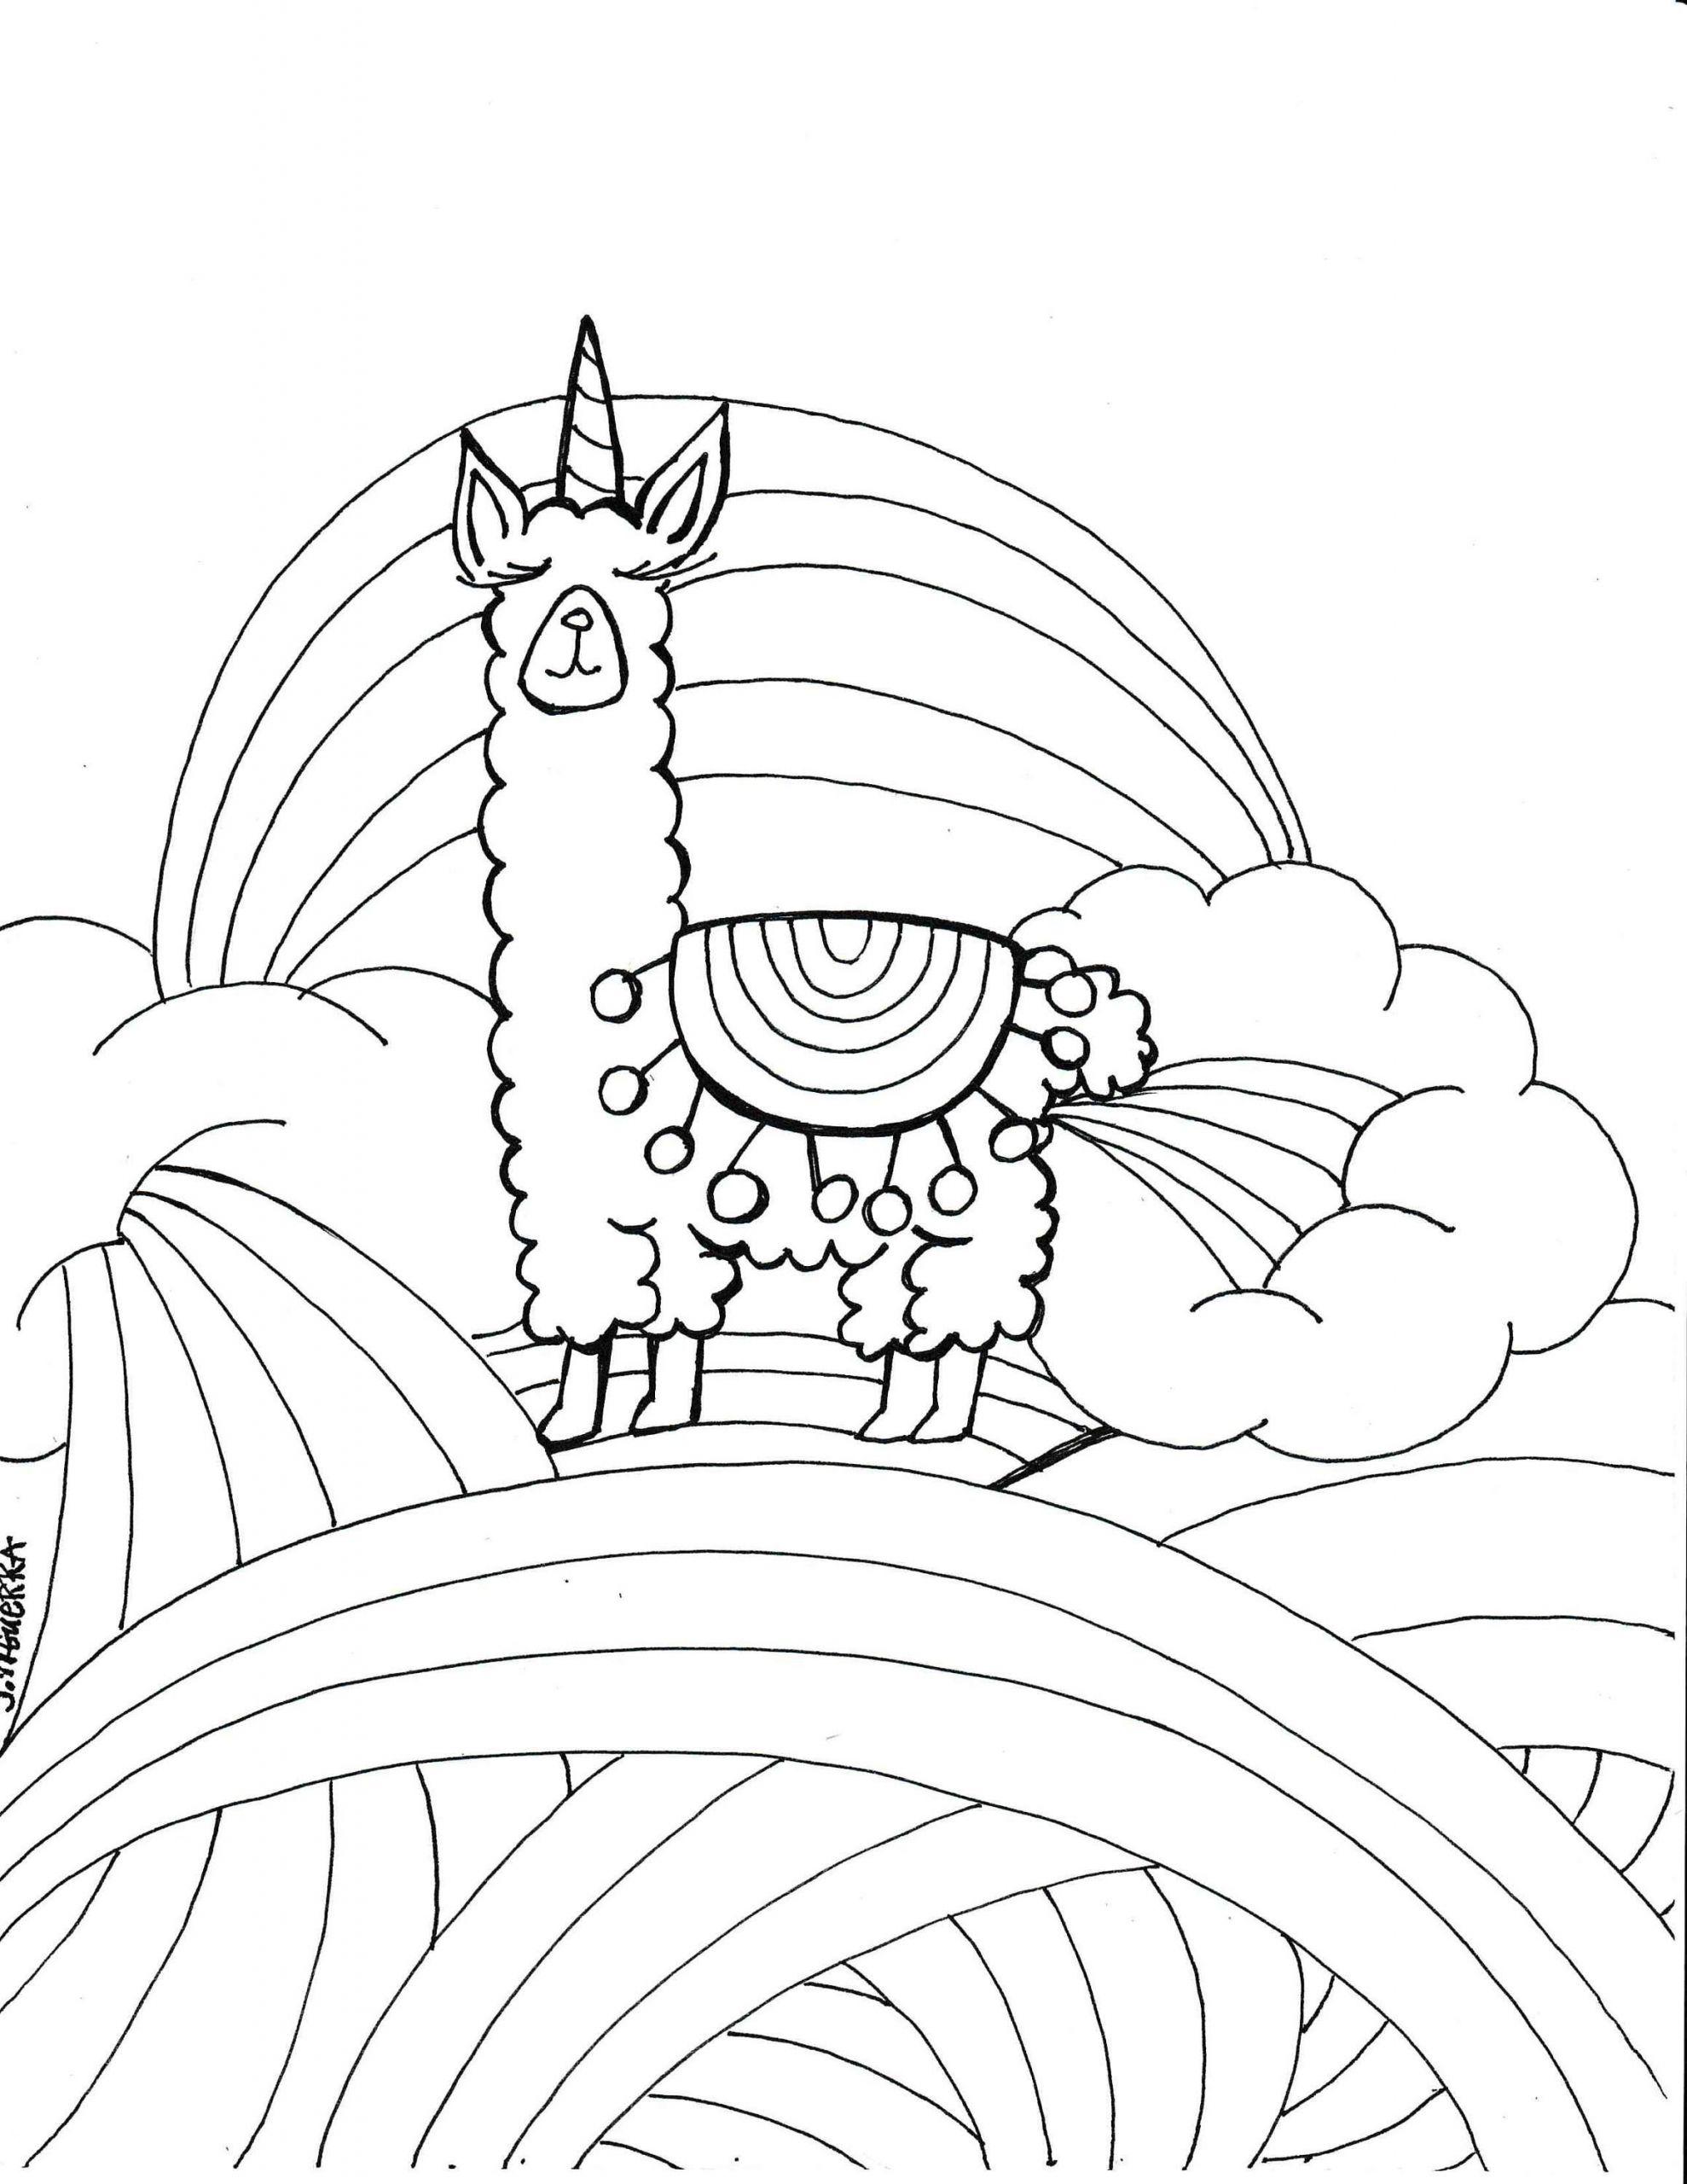 Toddler Coloring Pages Pdf
 Llamacorn coloring page PDF printable art by Journalingart